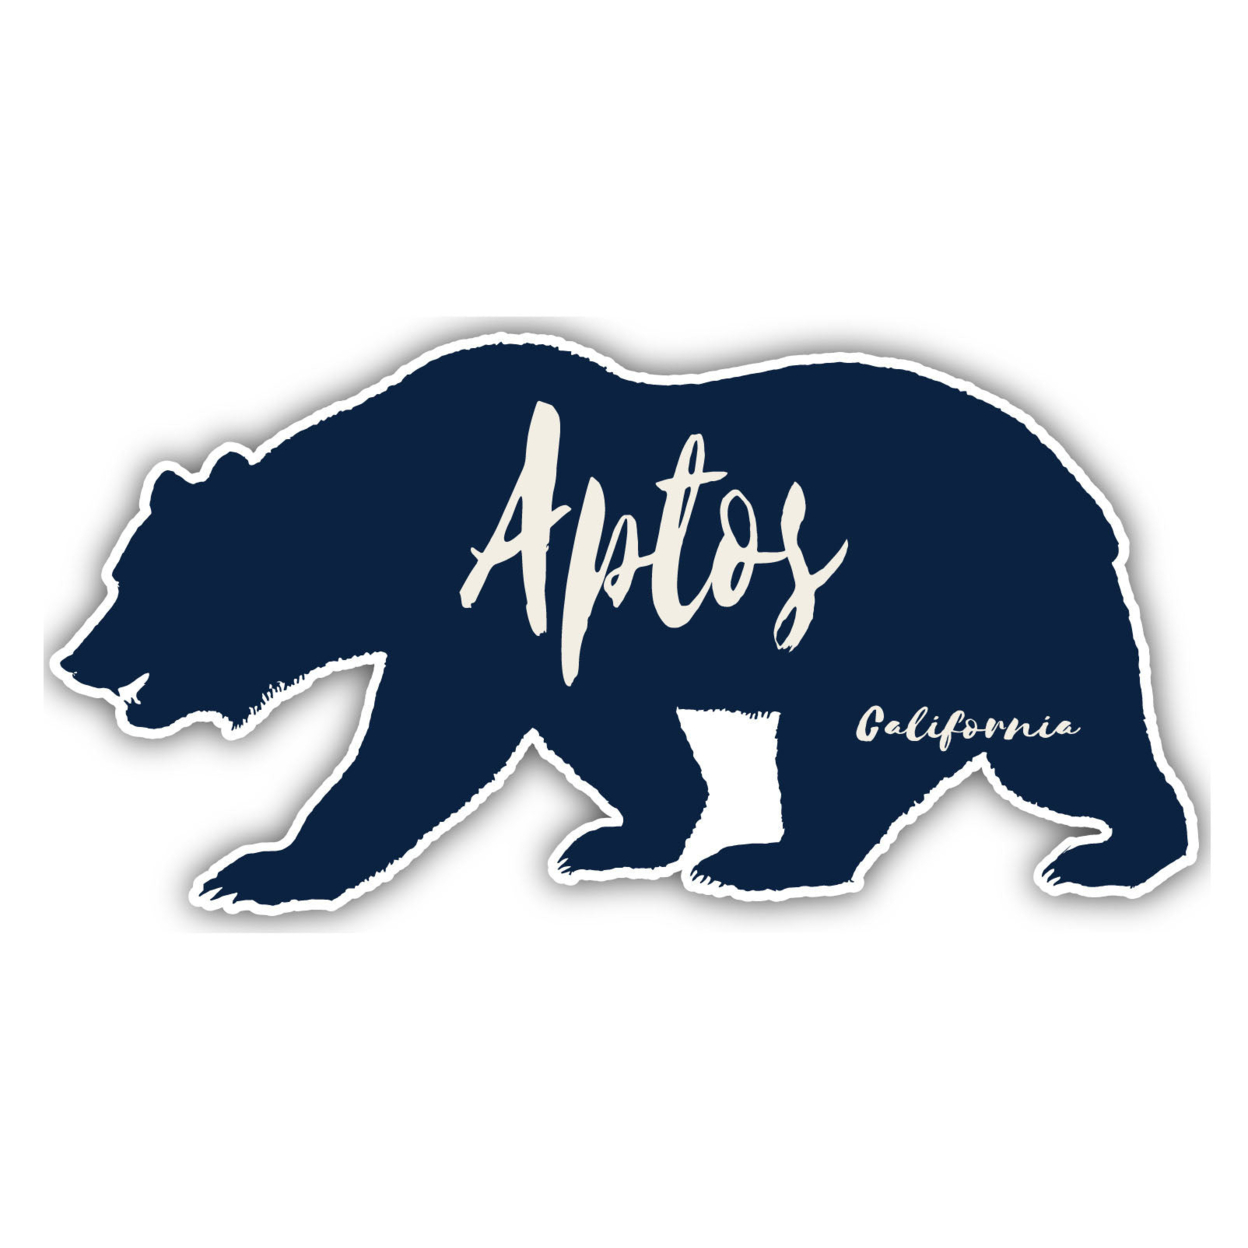 Aptos California Souvenir Decorative Stickers (Choose Theme And Size) - 4-Pack, 4-Inch, Bear